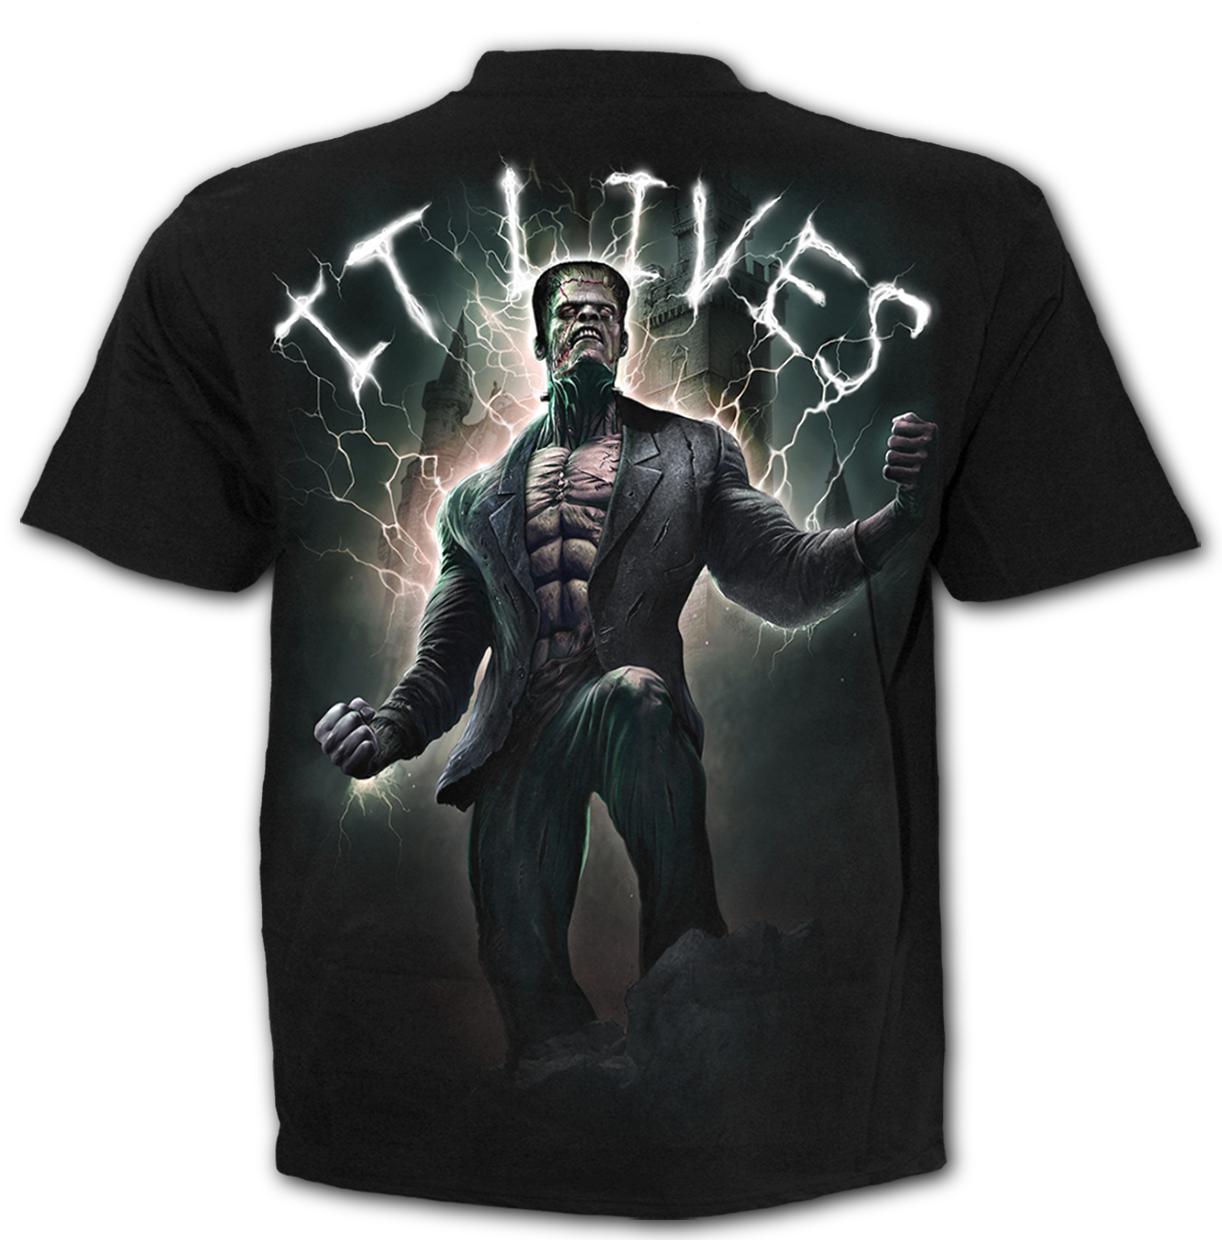 IT Lives - T-Shirt Black